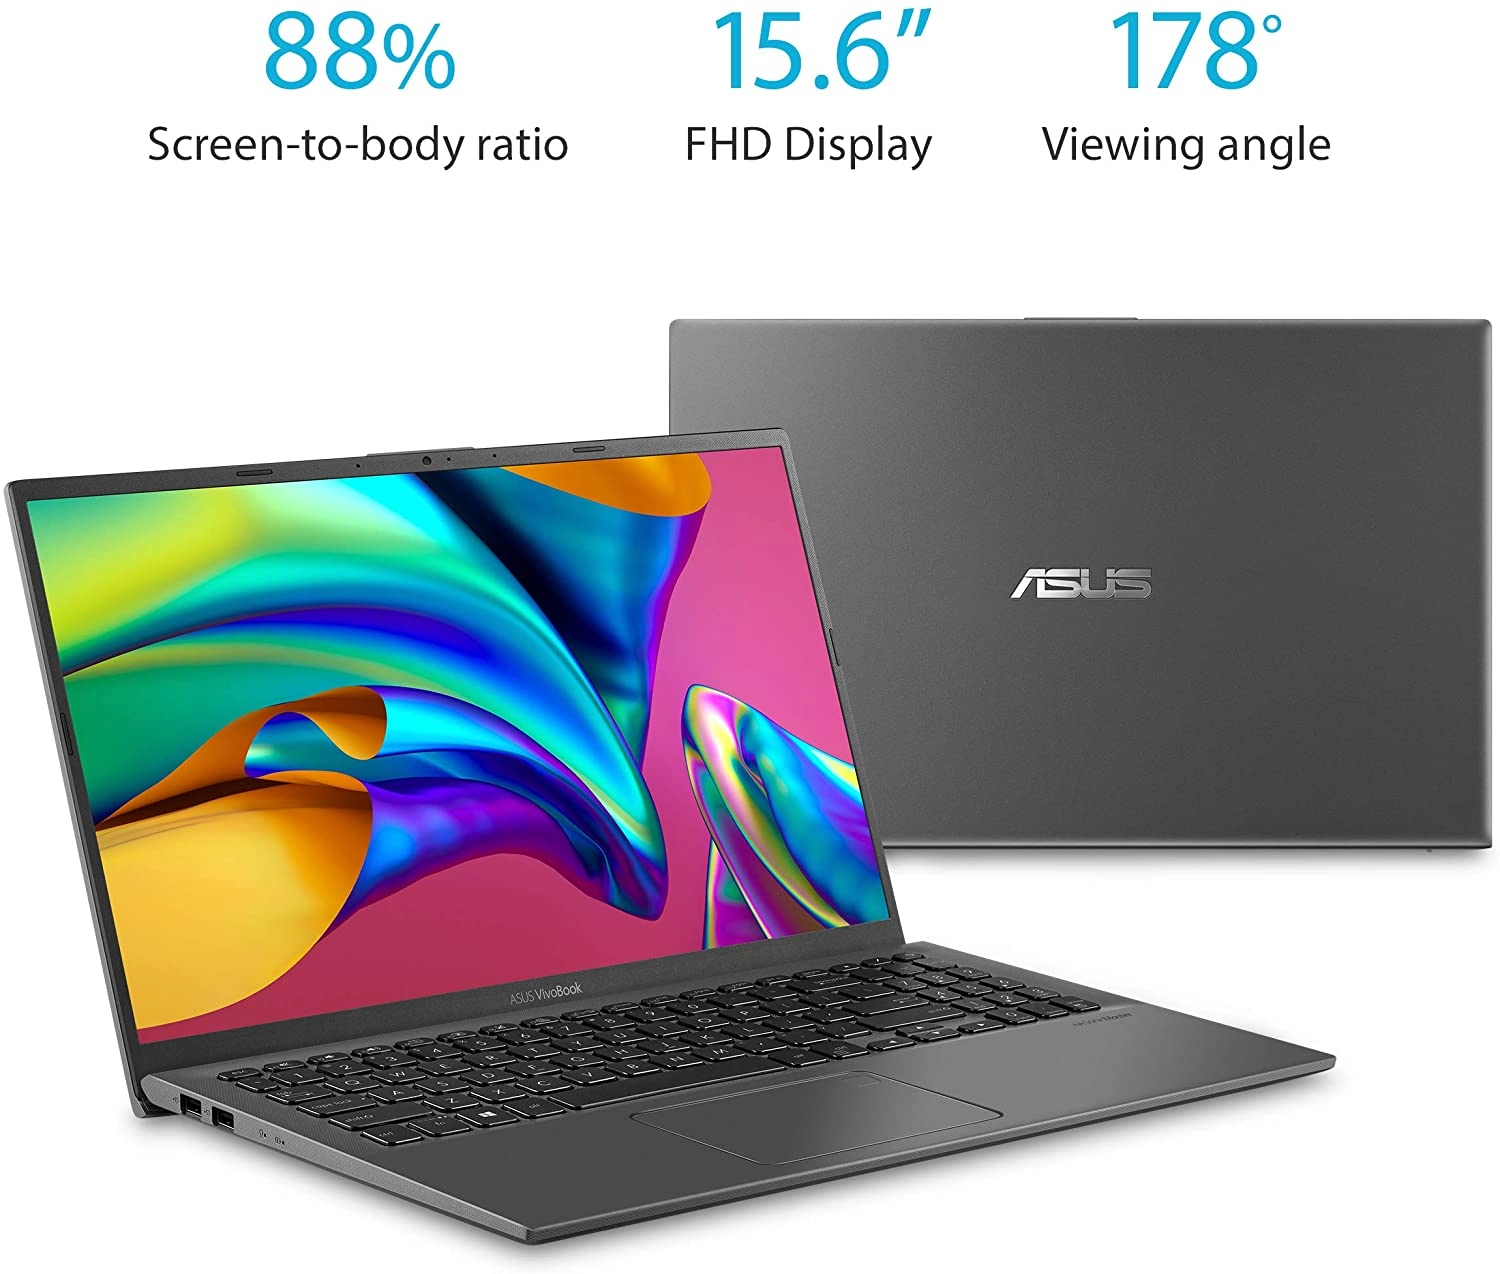 Asus VivoBook 15 laptop image